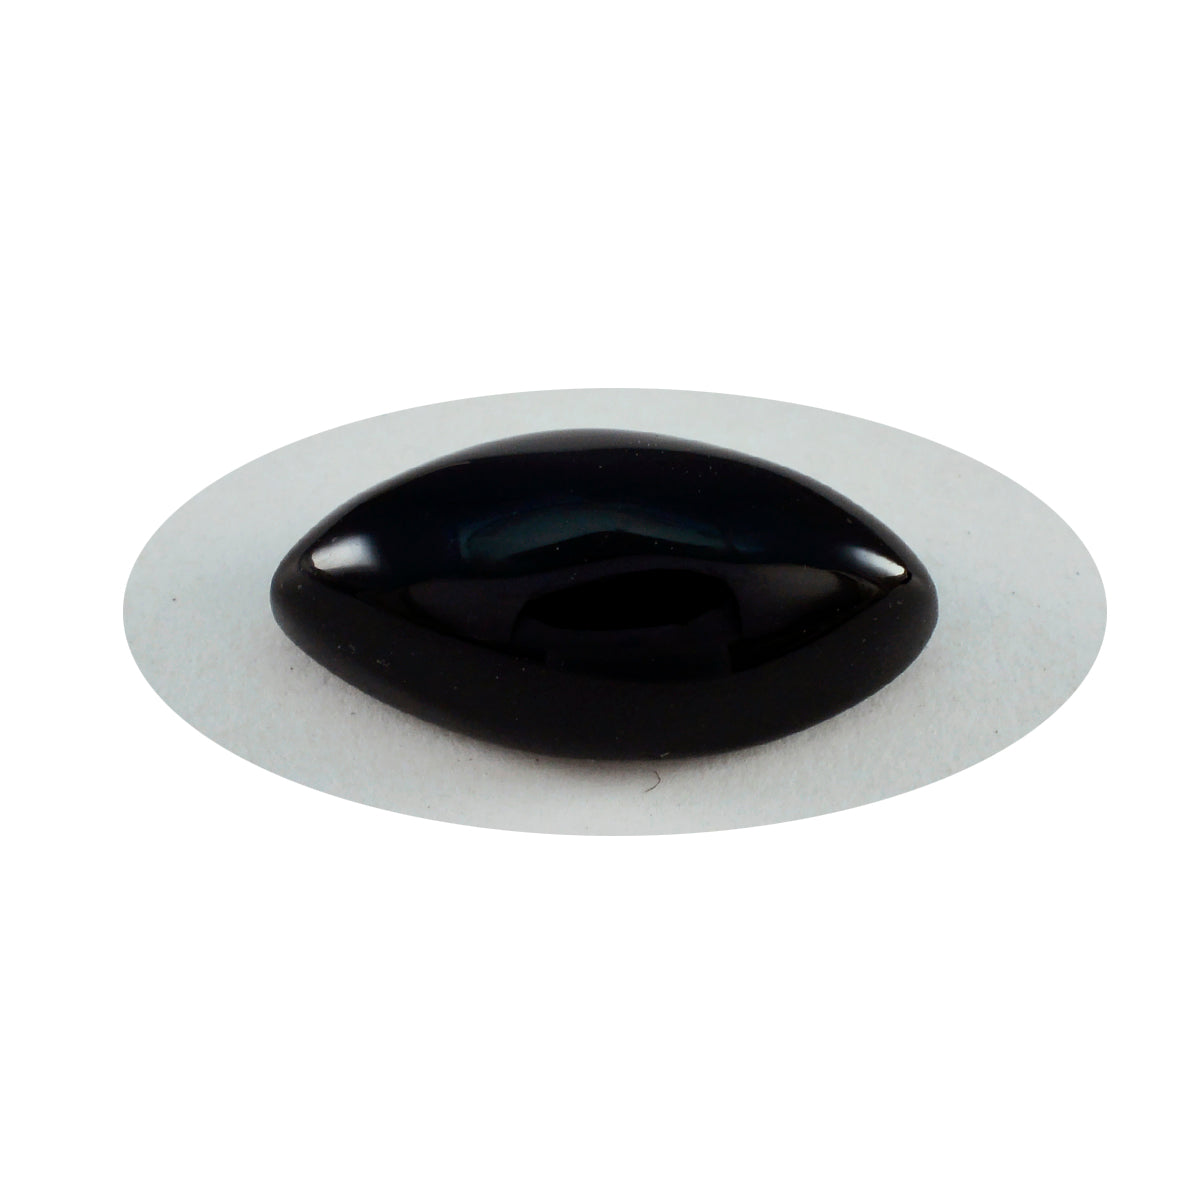 Riyogems 1PC Black Onyx Cabochon 11x22 mm Marquise Shape pretty Quality Loose Gemstone